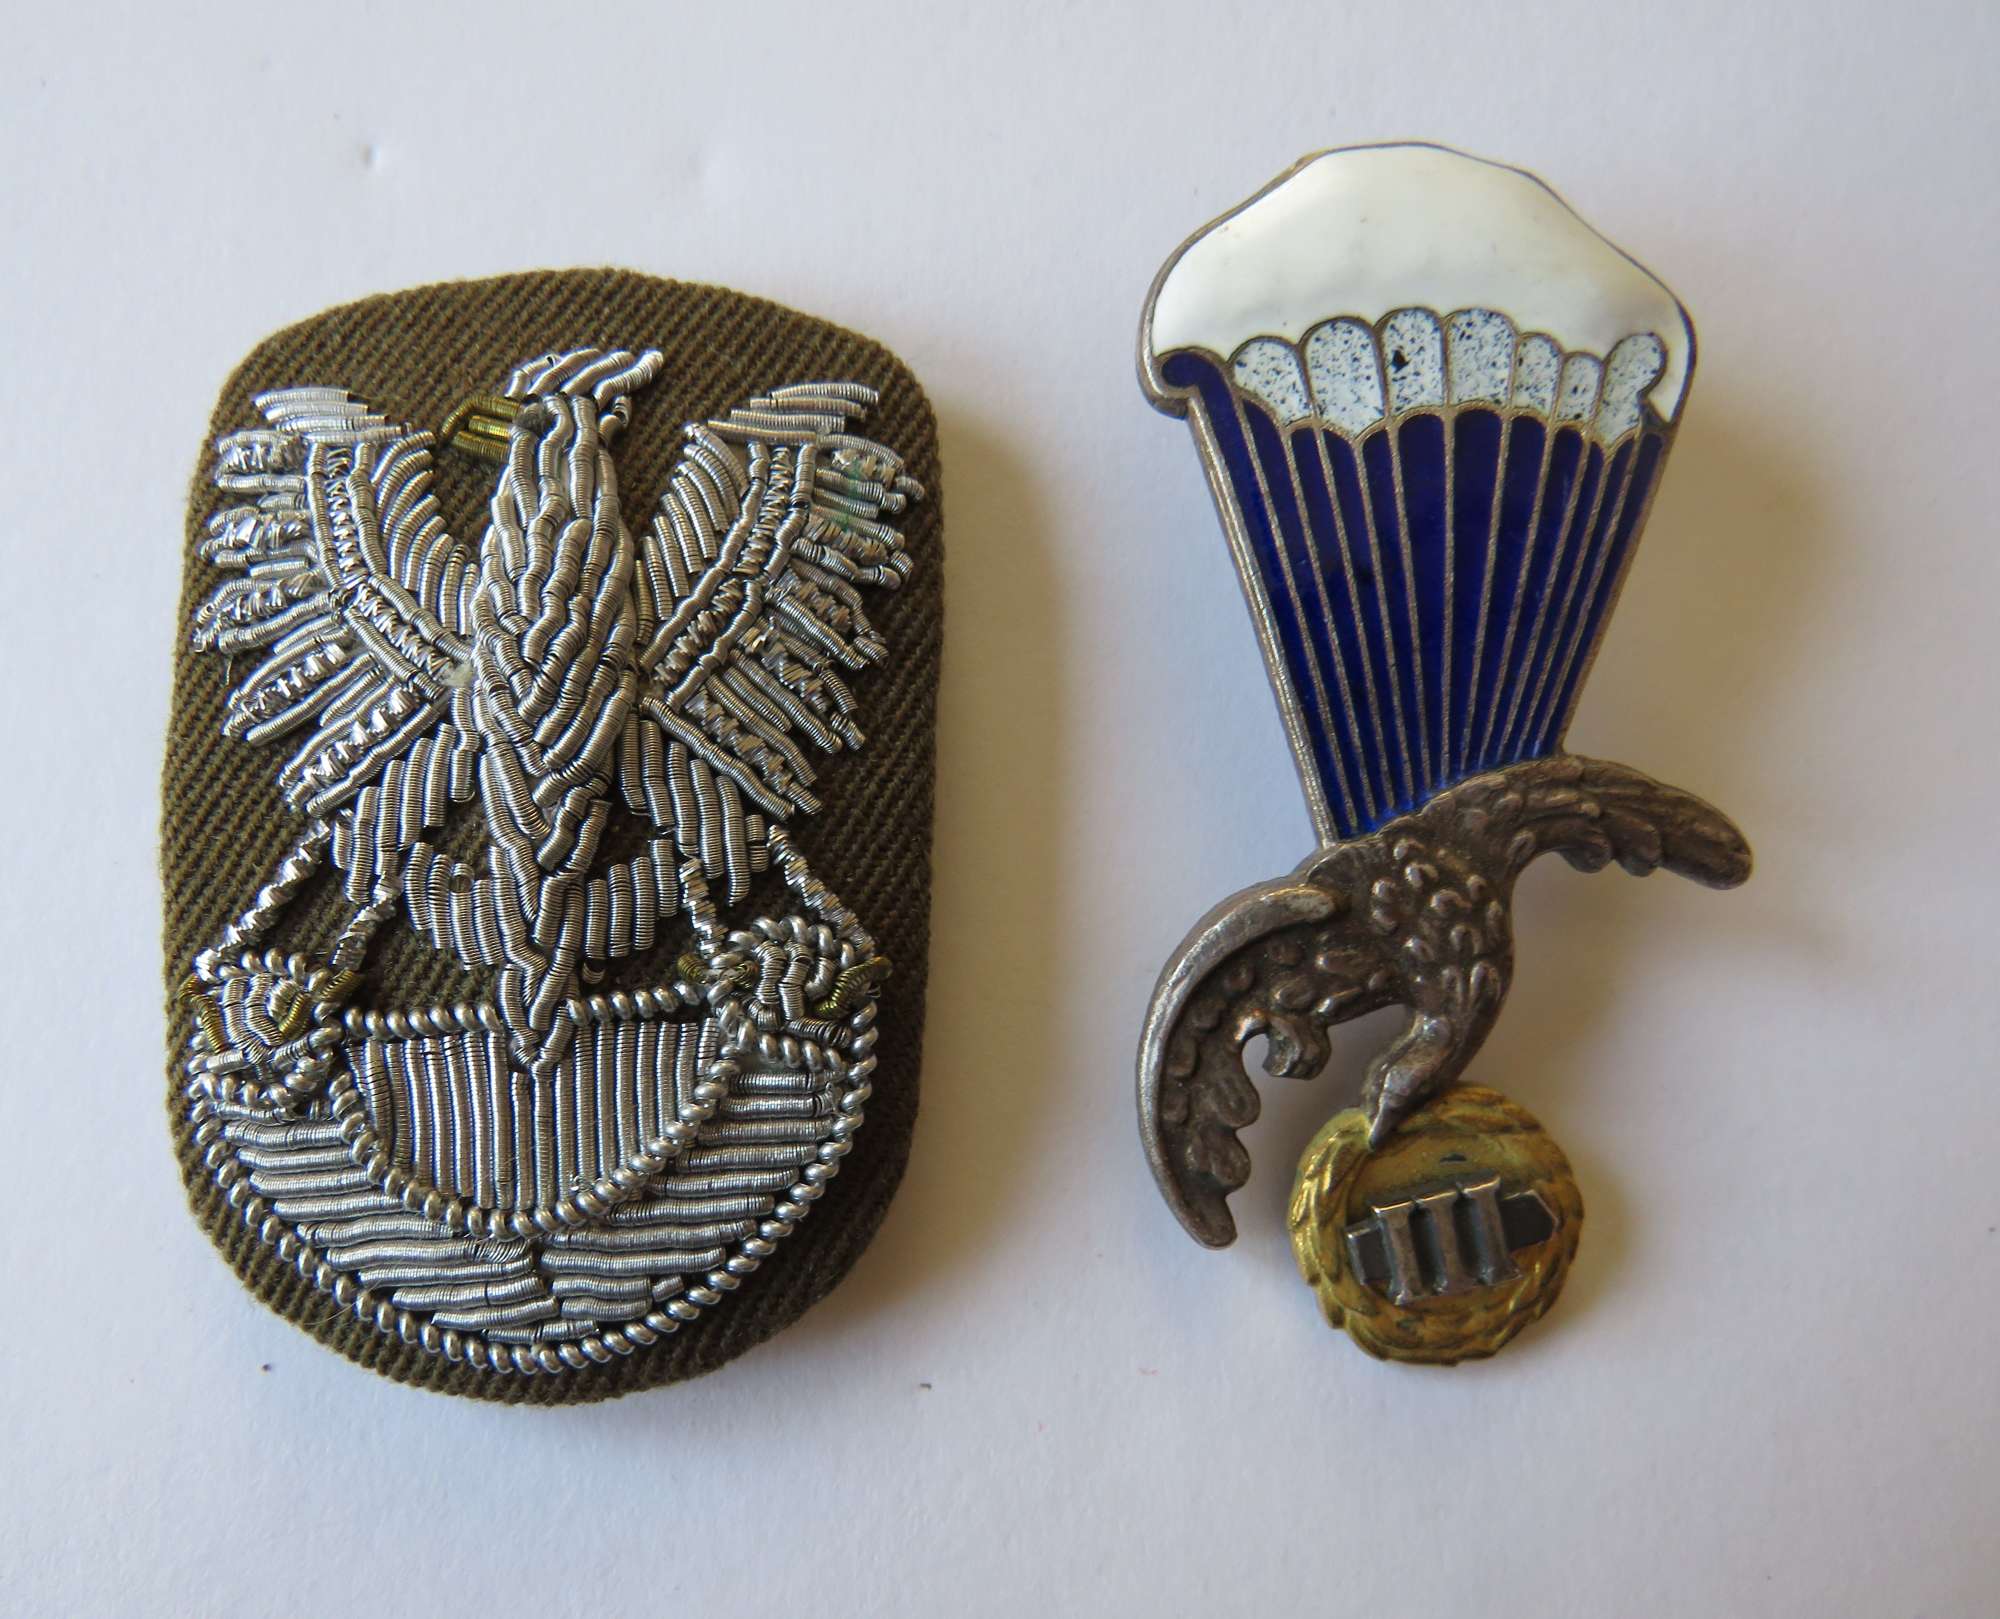 Two Post War Polish Badges